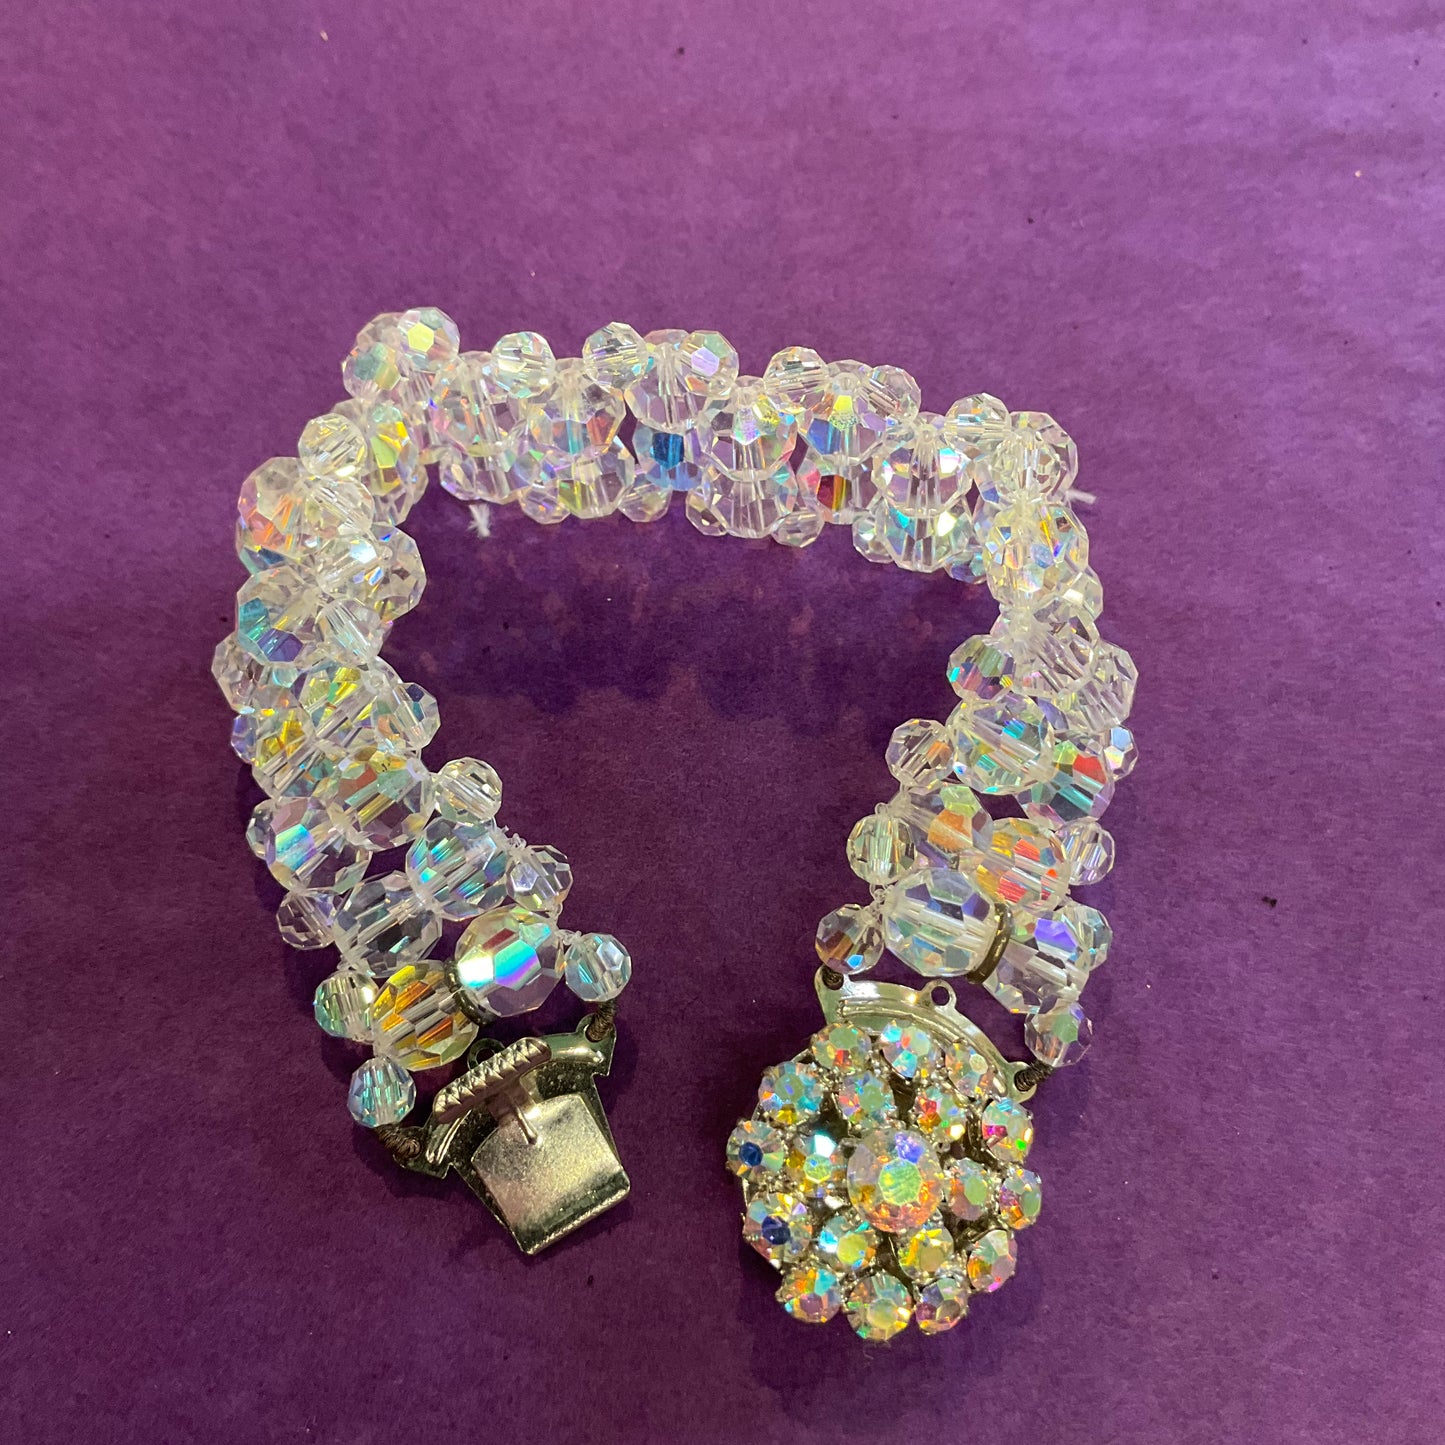 Vintage 1950s Rainbow Borealis Crystal bracelet, rhinestone clasp, wedding, prom, gift for her.